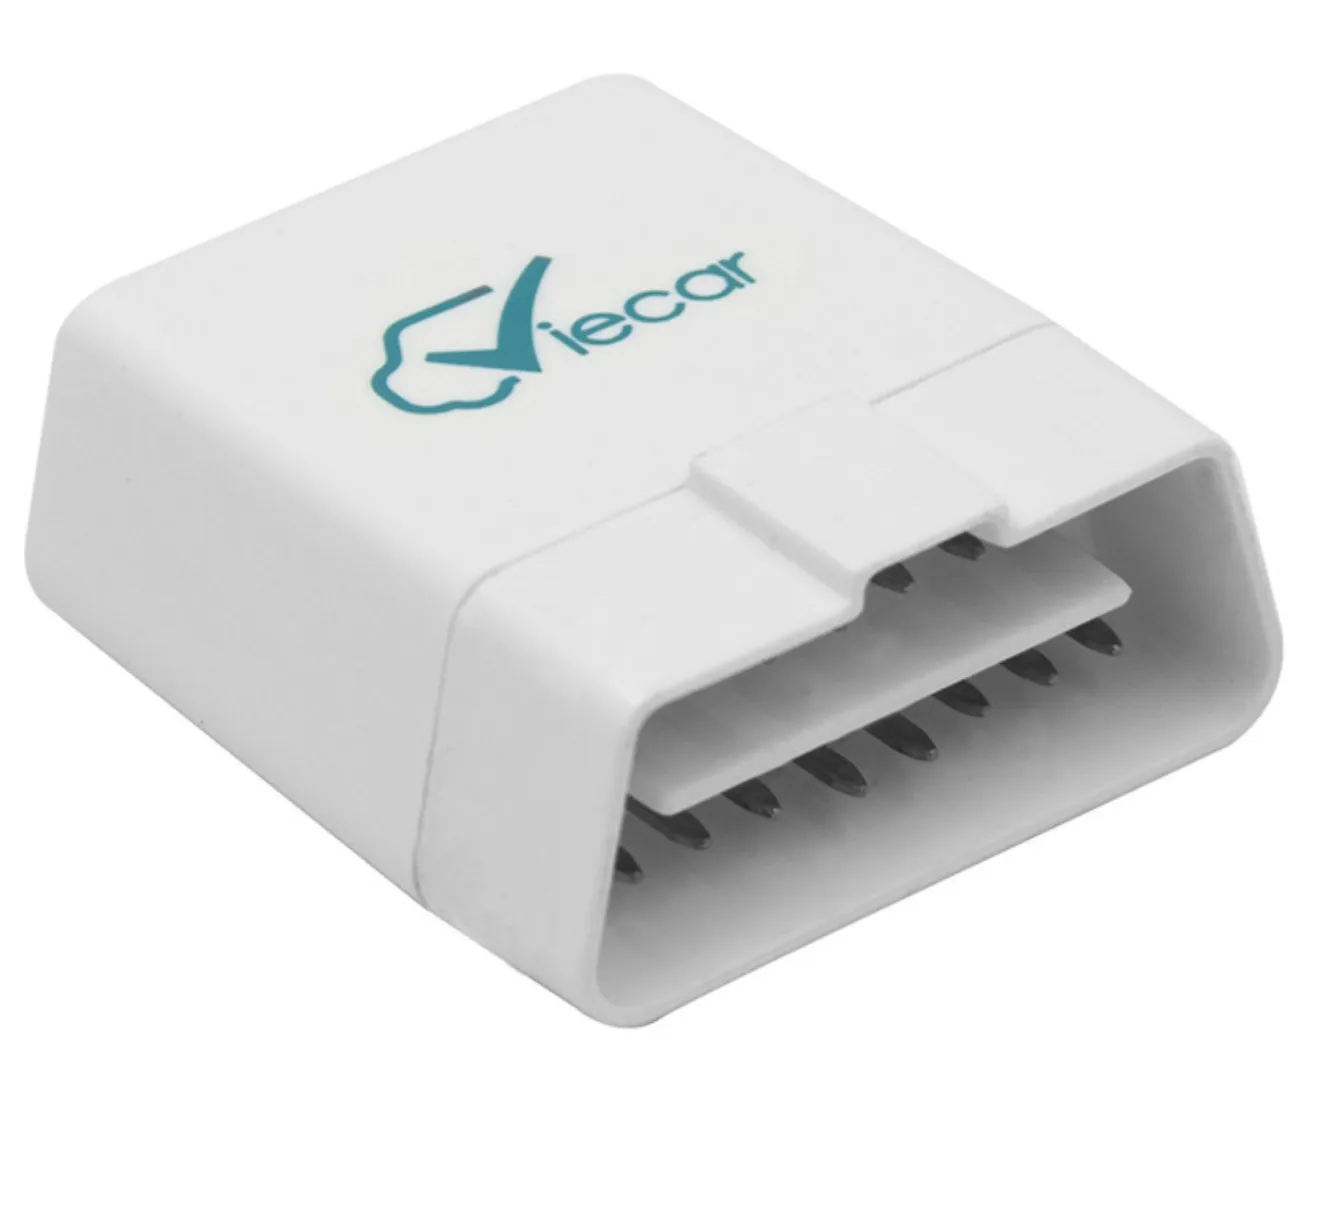 Originele Bluetooth 4.0 OBD2 Auto Diagnostic Reader Scanner VieCAR VC100 Automobiel Learning OBD Diagnostic Tool